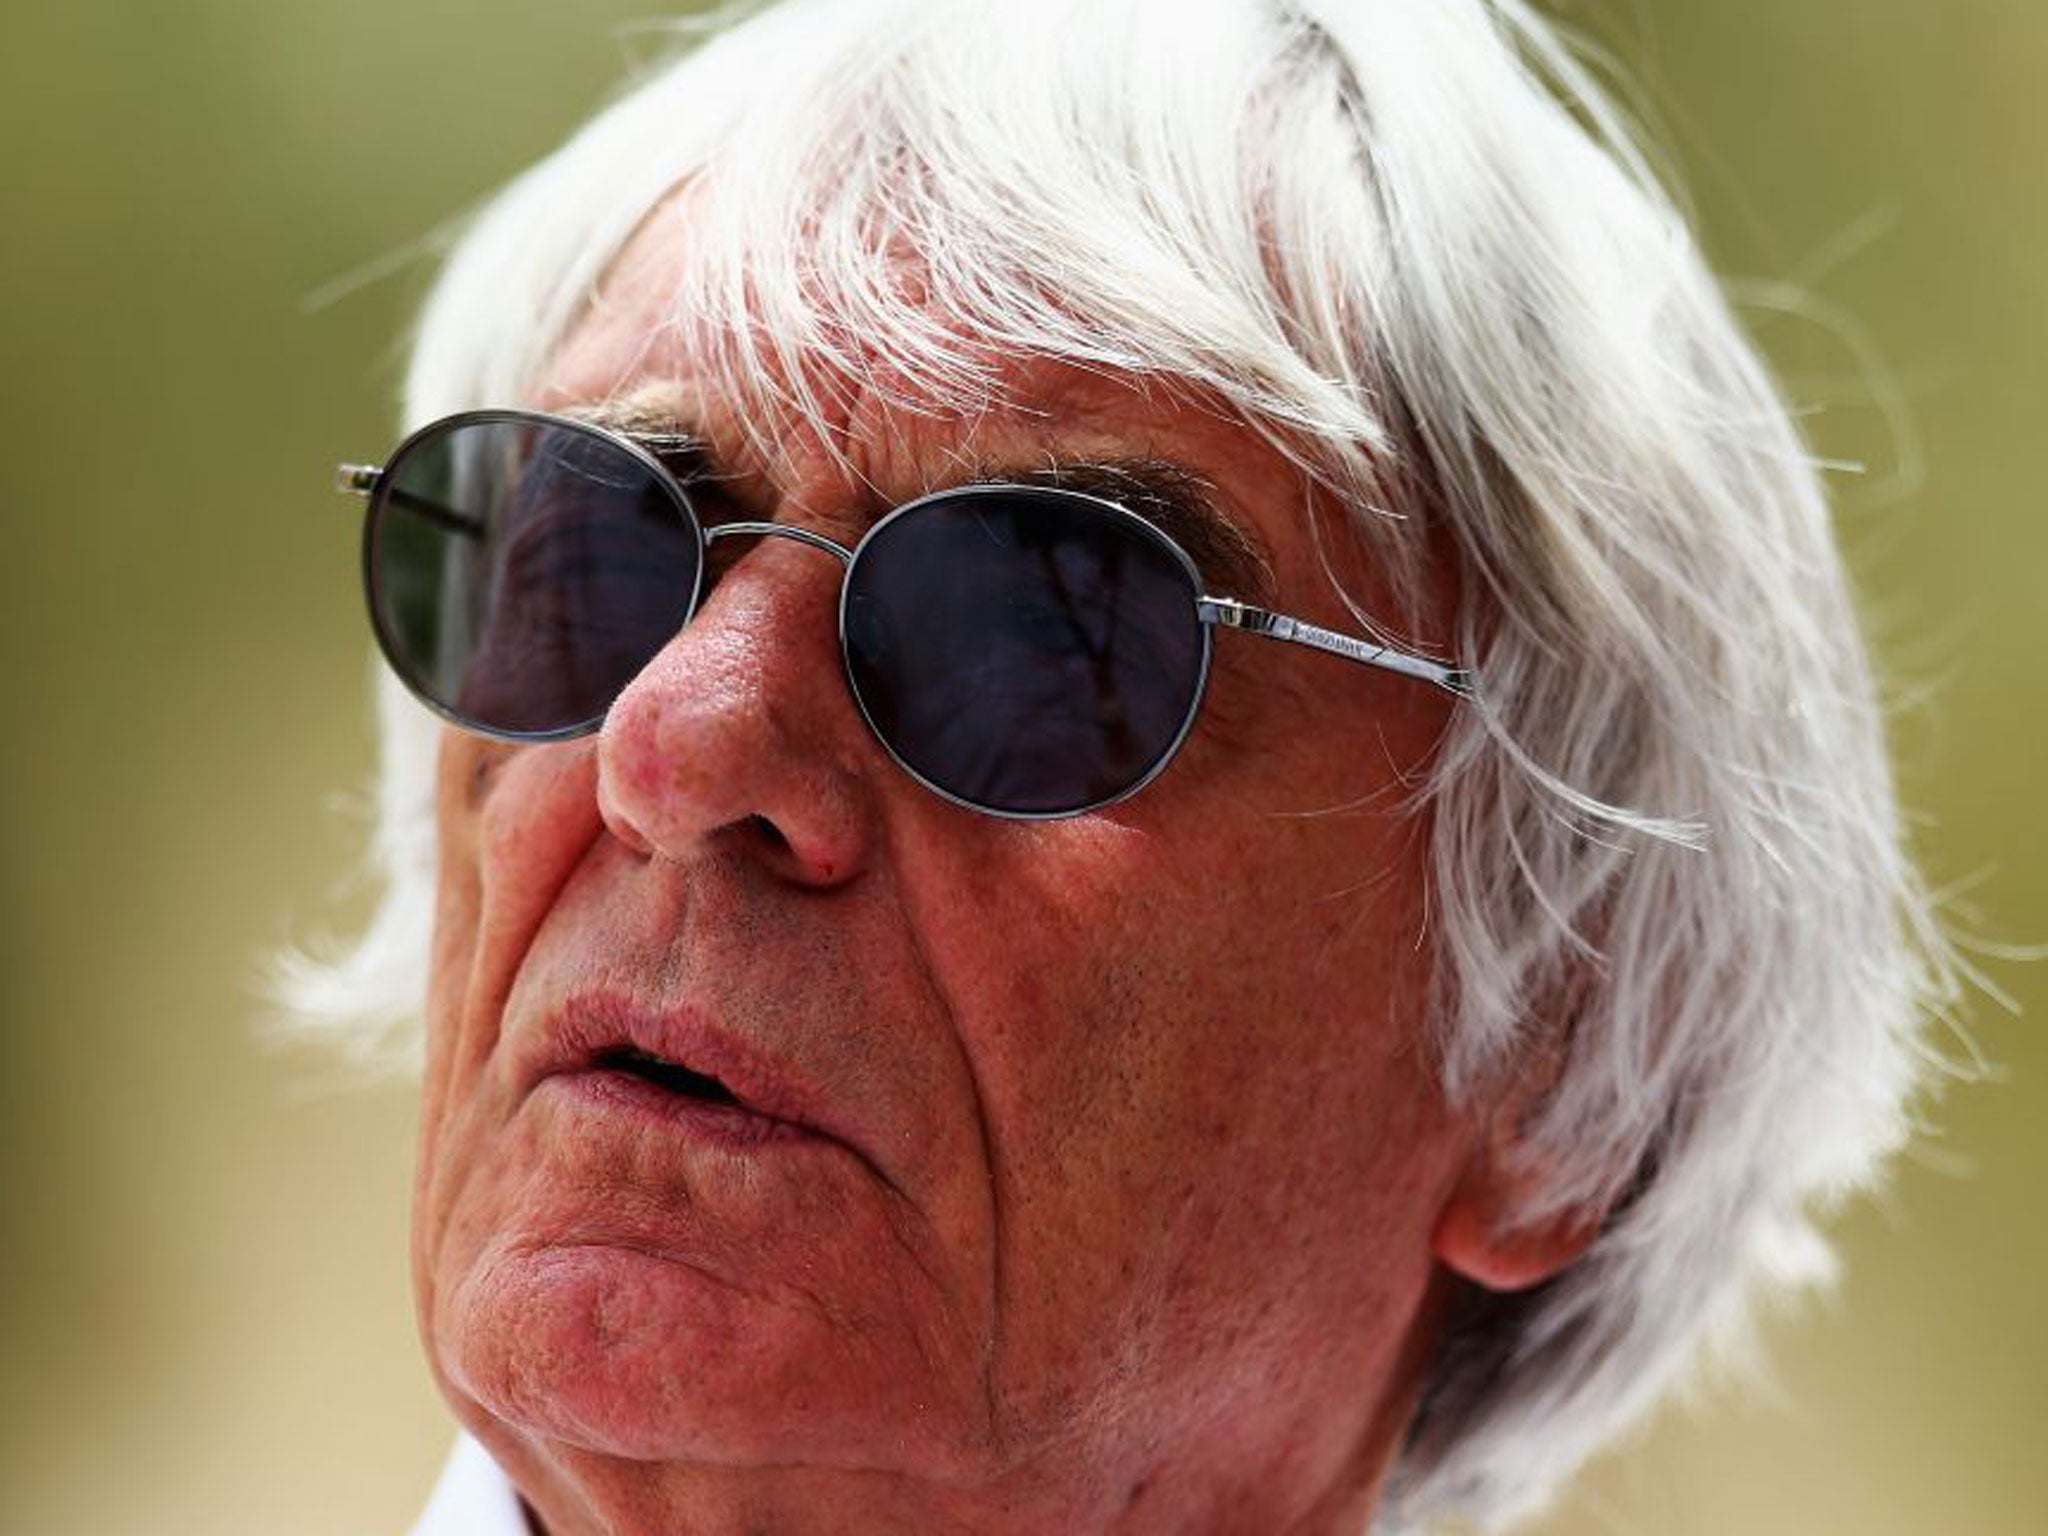 The Formula One chief executive Bernie Ecclestone